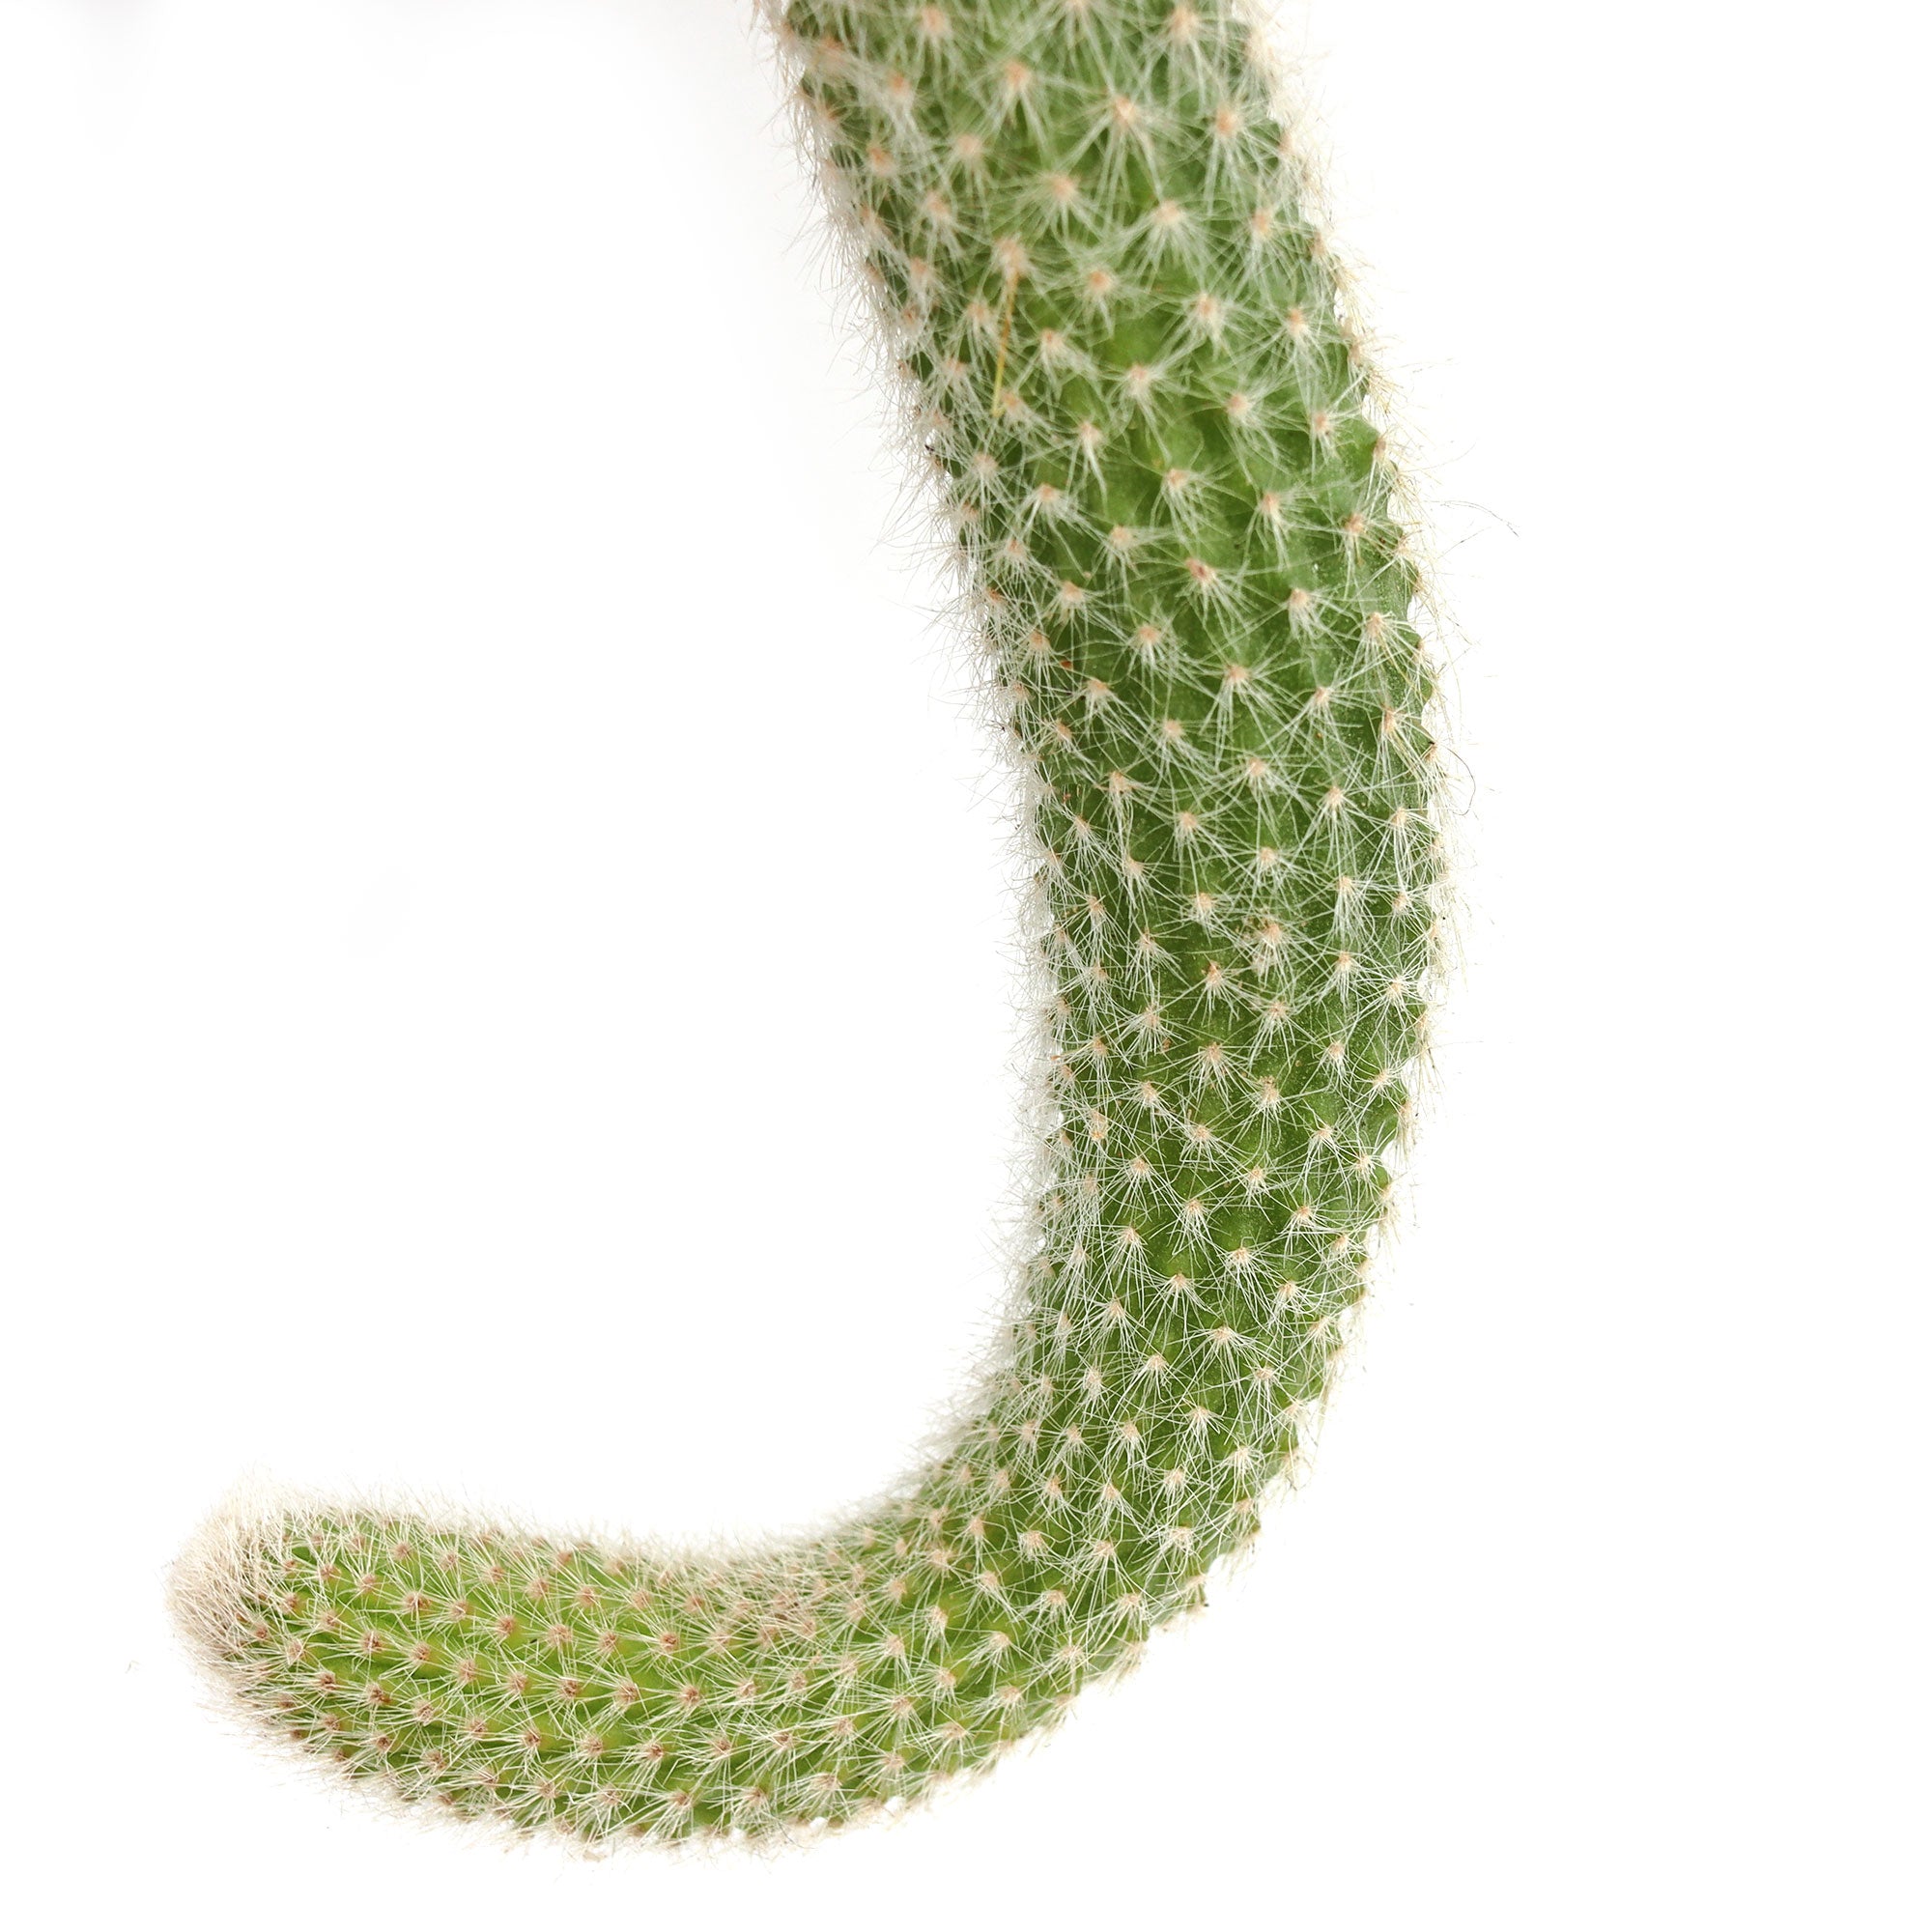 Cleistocactus winteri ssp. colademononis 'Monkey Tail Cactus'